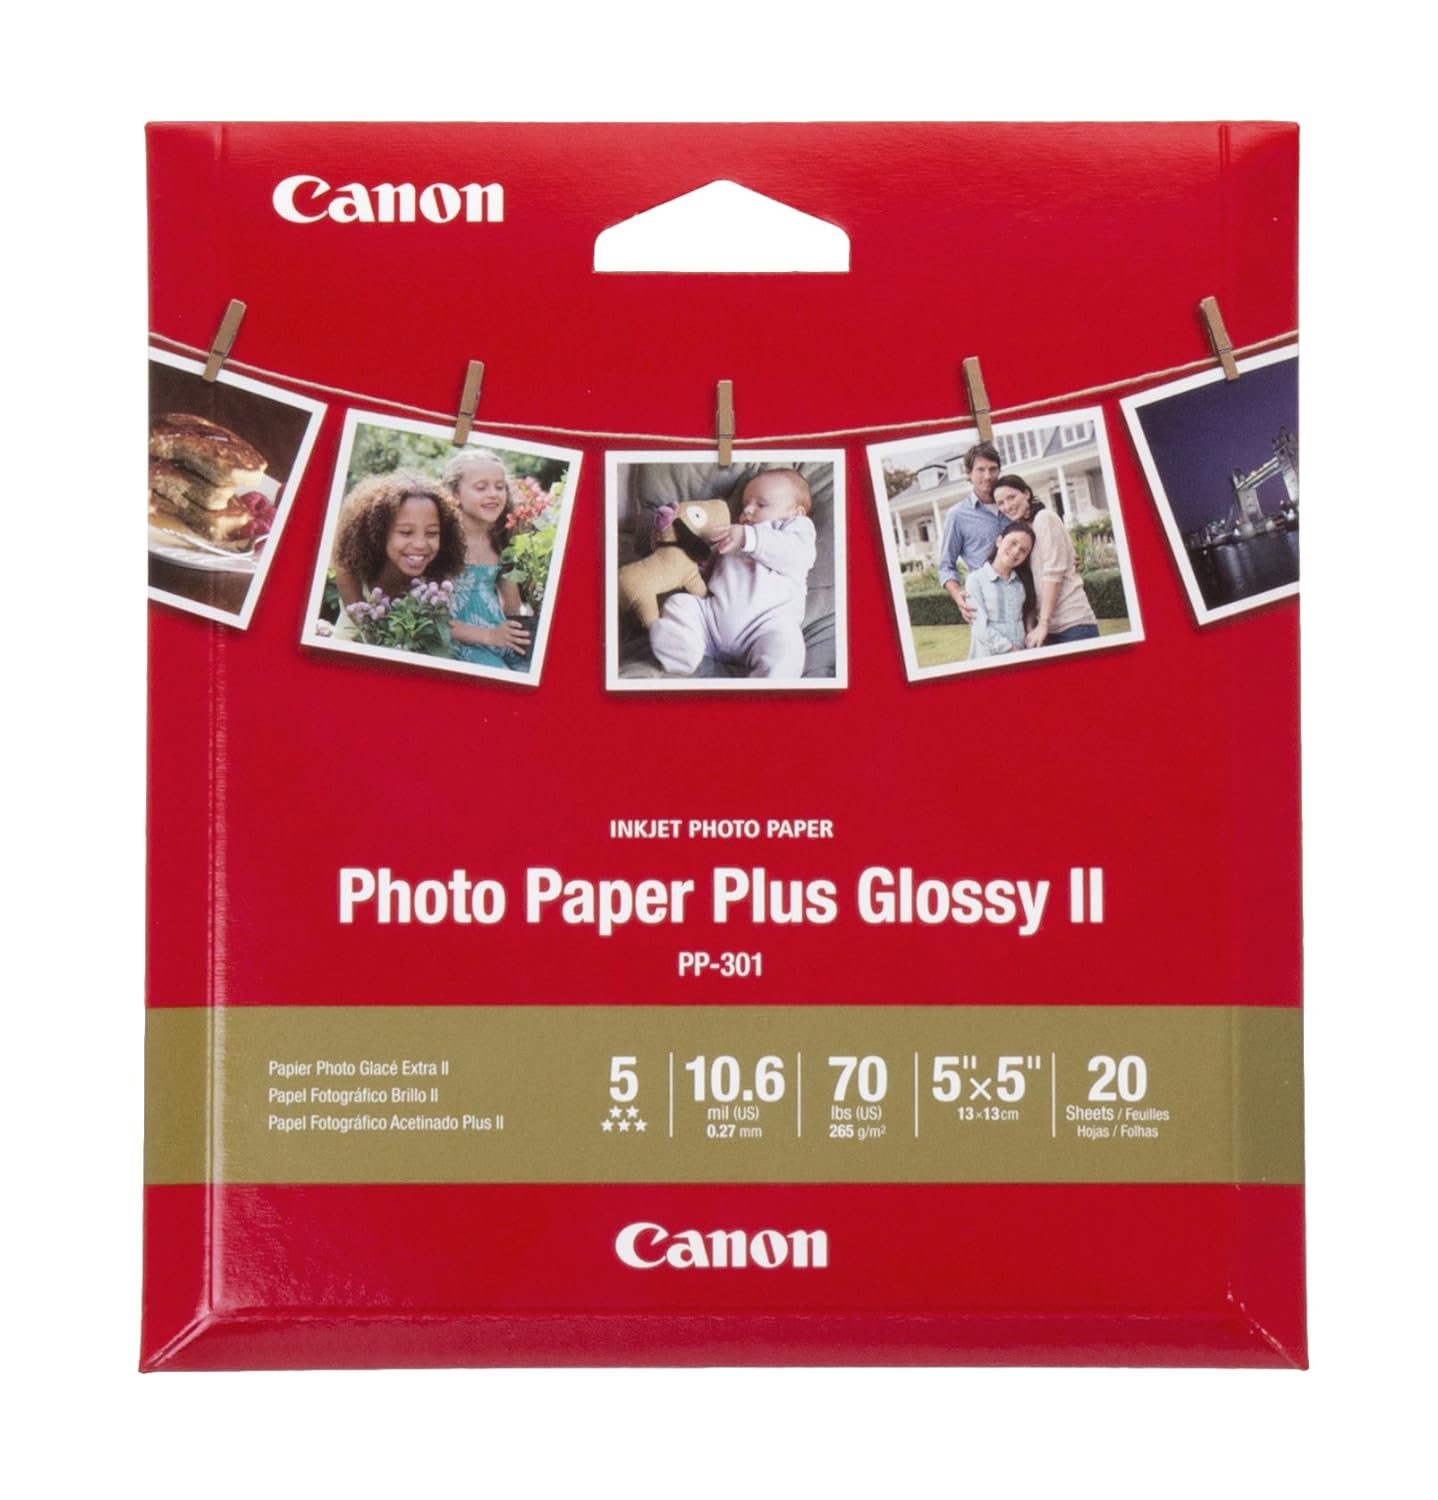 Canon Glossy Photo Paper Plus II, Square Printing for TS9020, TS8020, TS6020, TS5020 Printers, 5'x5' (20 Sheets)